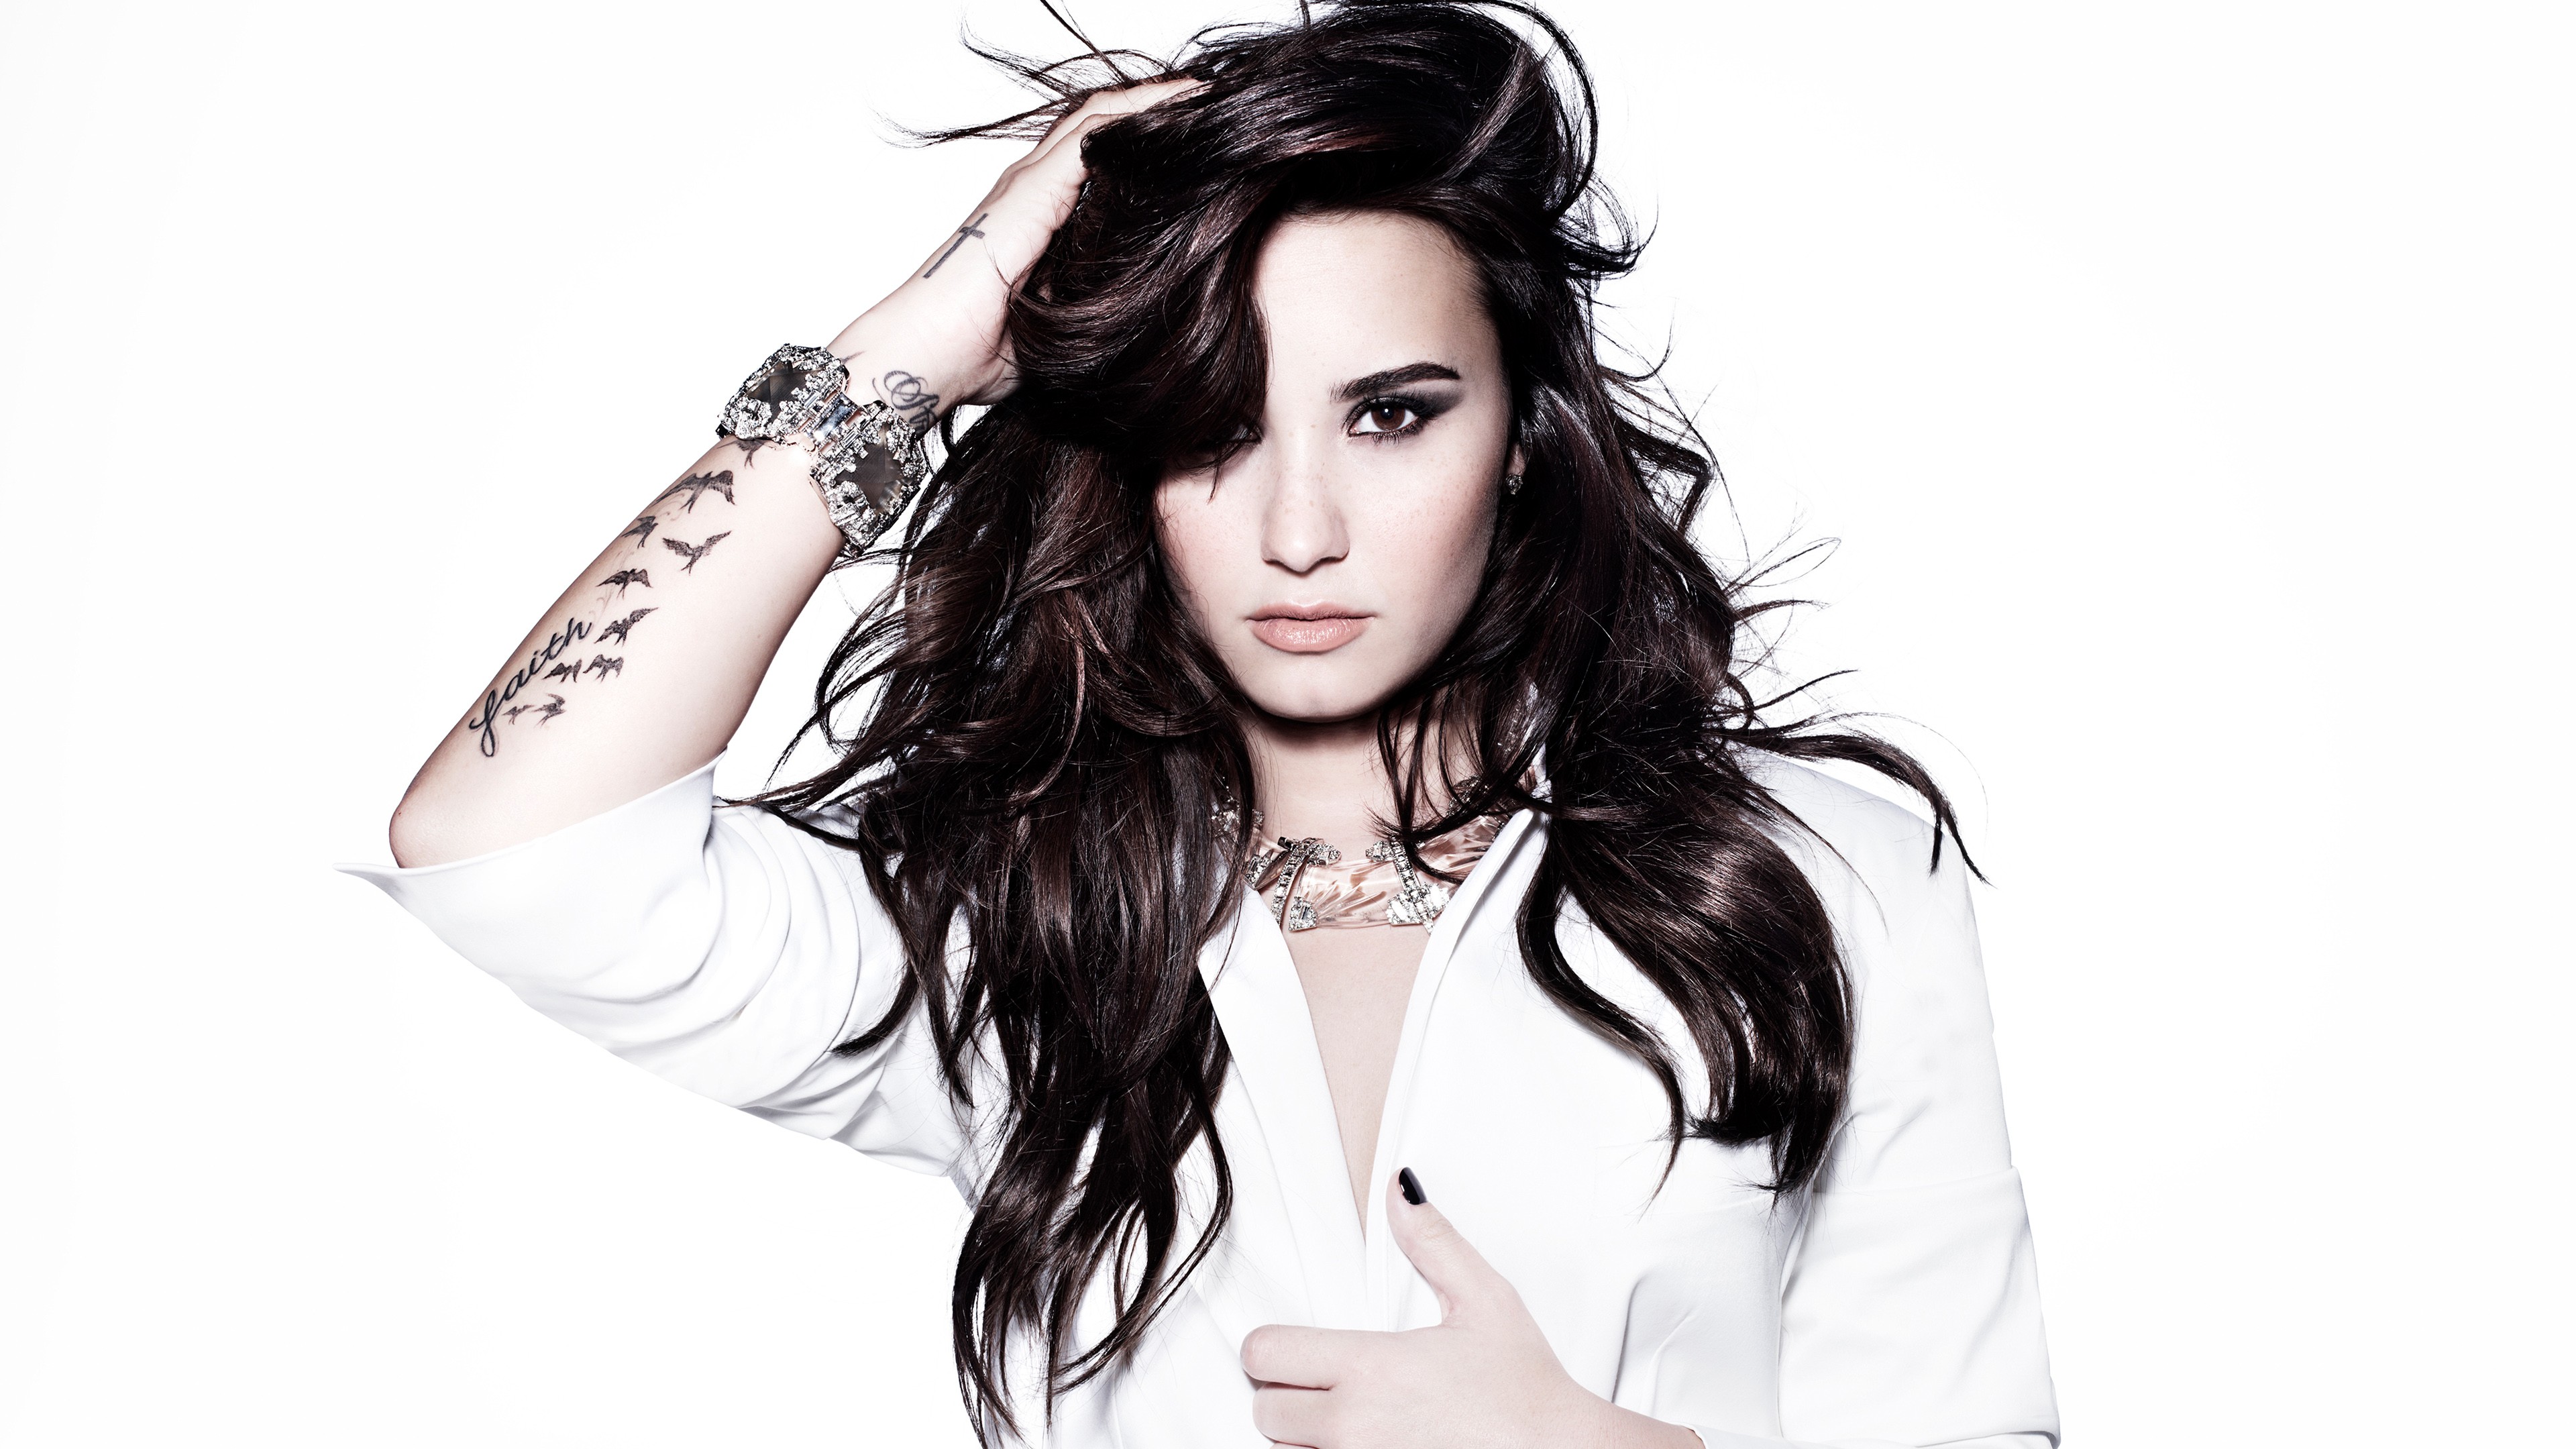 Descarga gratuita de fondo de pantalla para móvil de Música, Morena, Cantante, Ojos Cafés, Vestido Blanco, Demi Lovato.